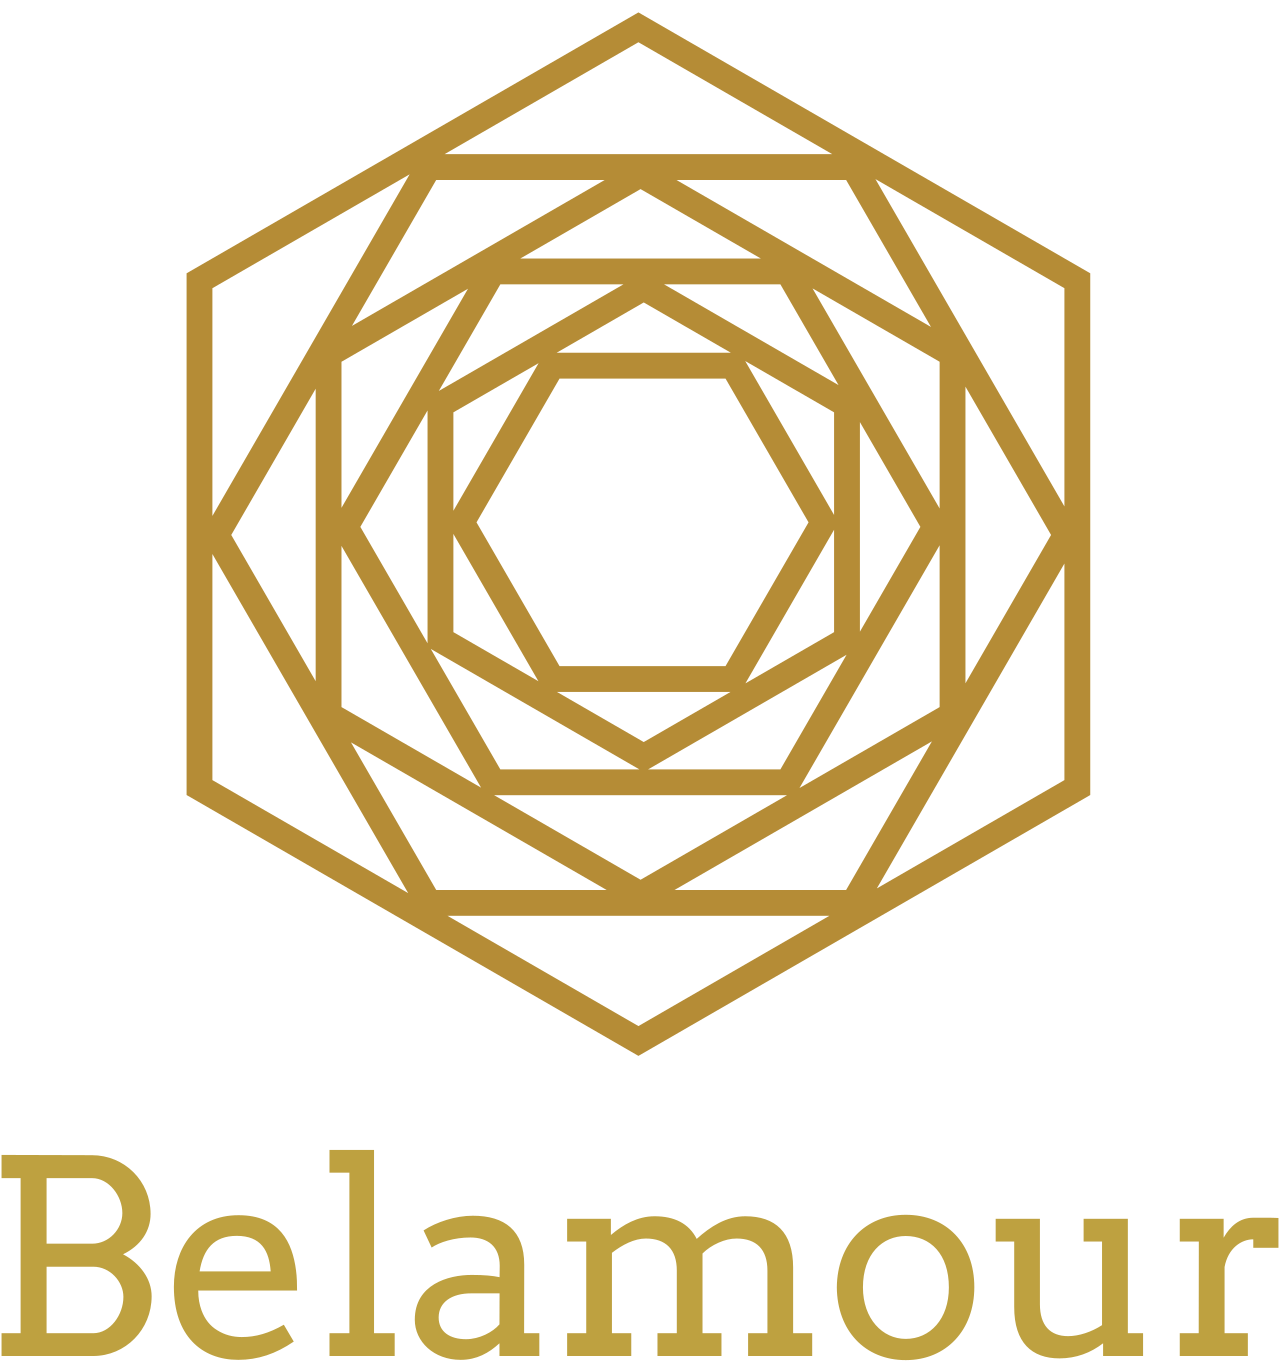 Belamour's logo